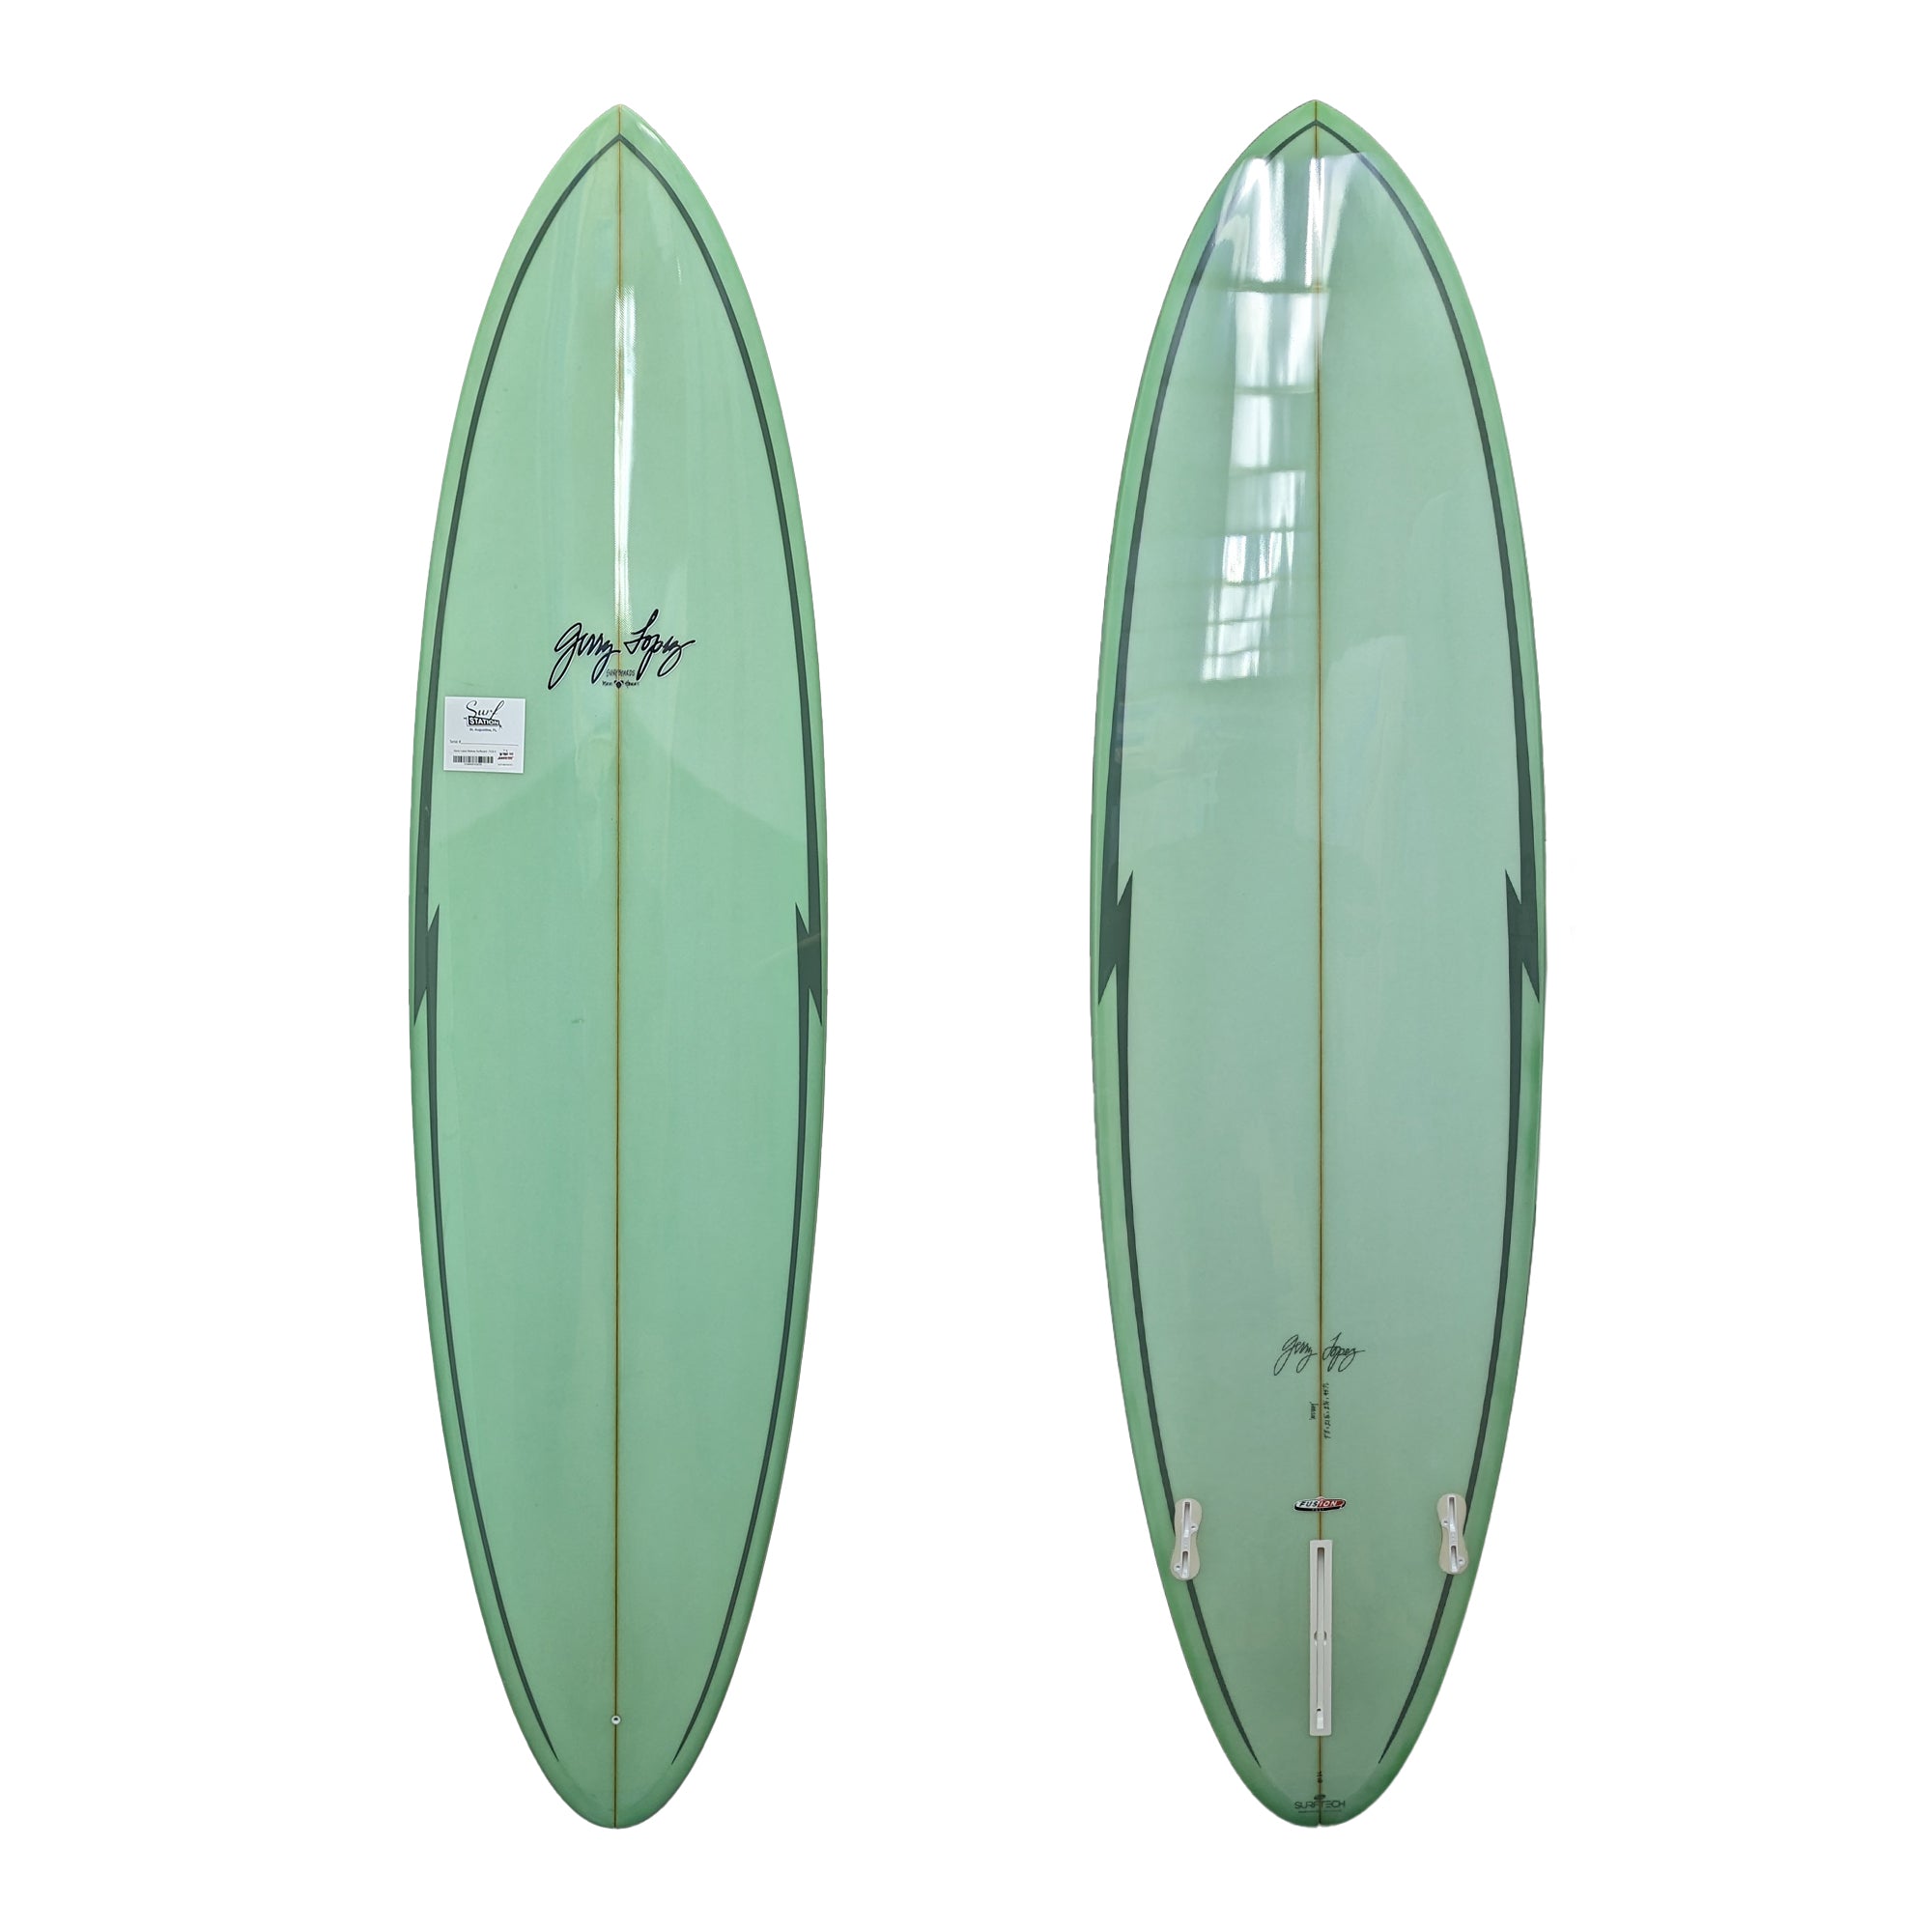 Gerry Lopez Midway Surfboard - FCS II